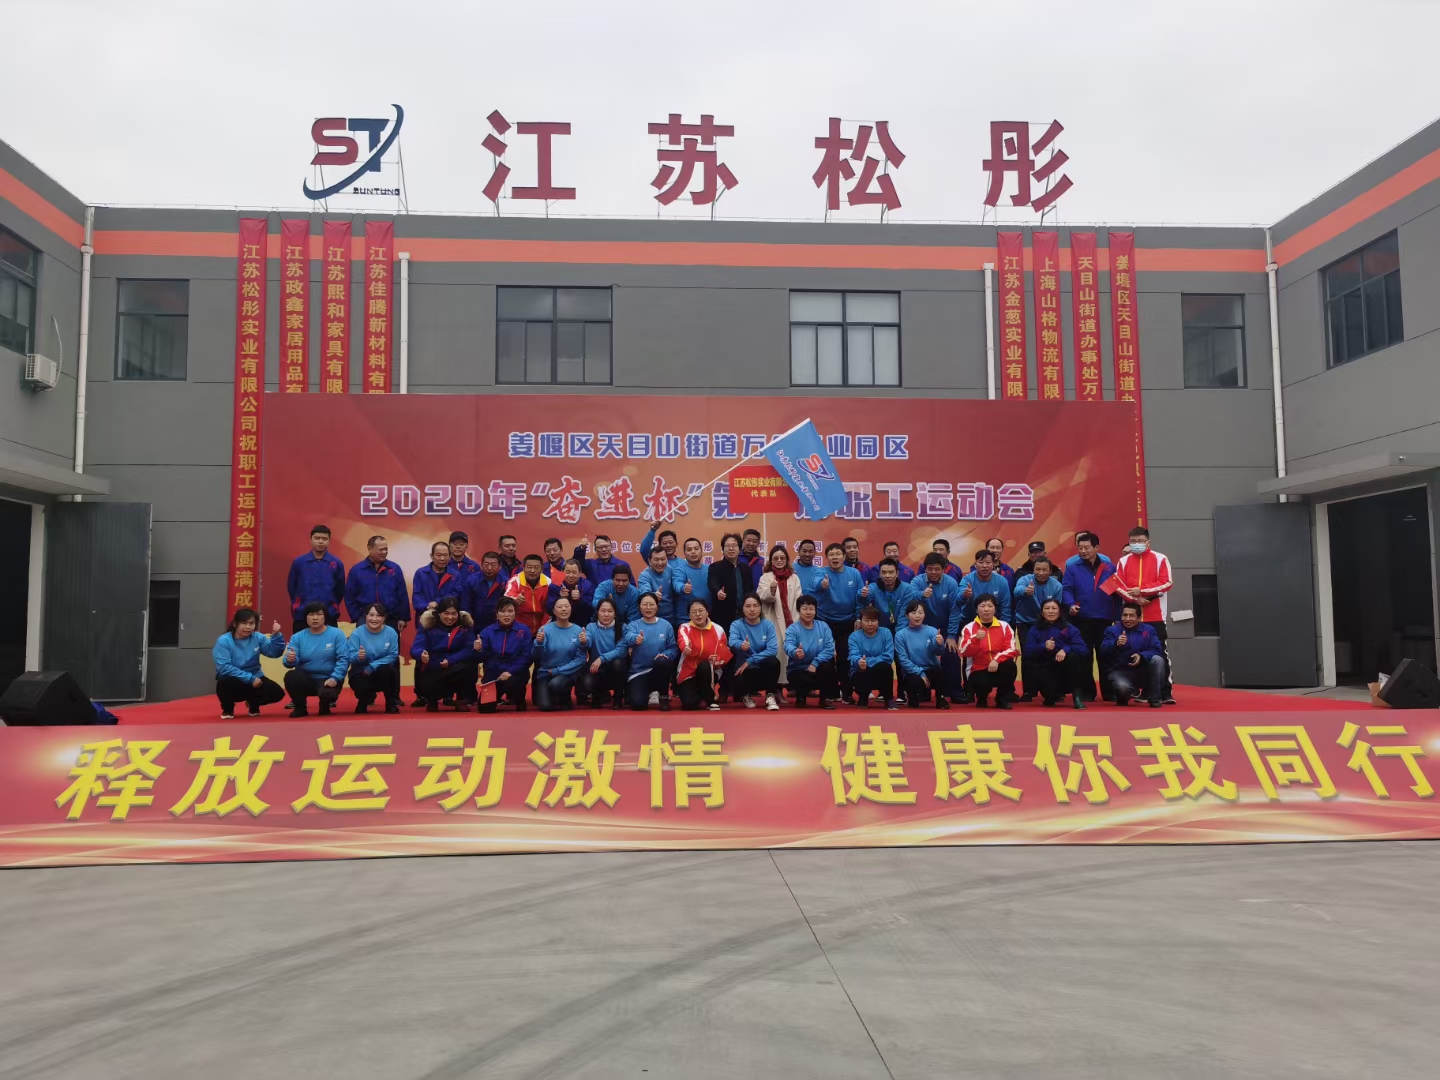 The 1st Sports Meet "Fen Jin Bei" of Jiangsu Suntung Group was held successfully